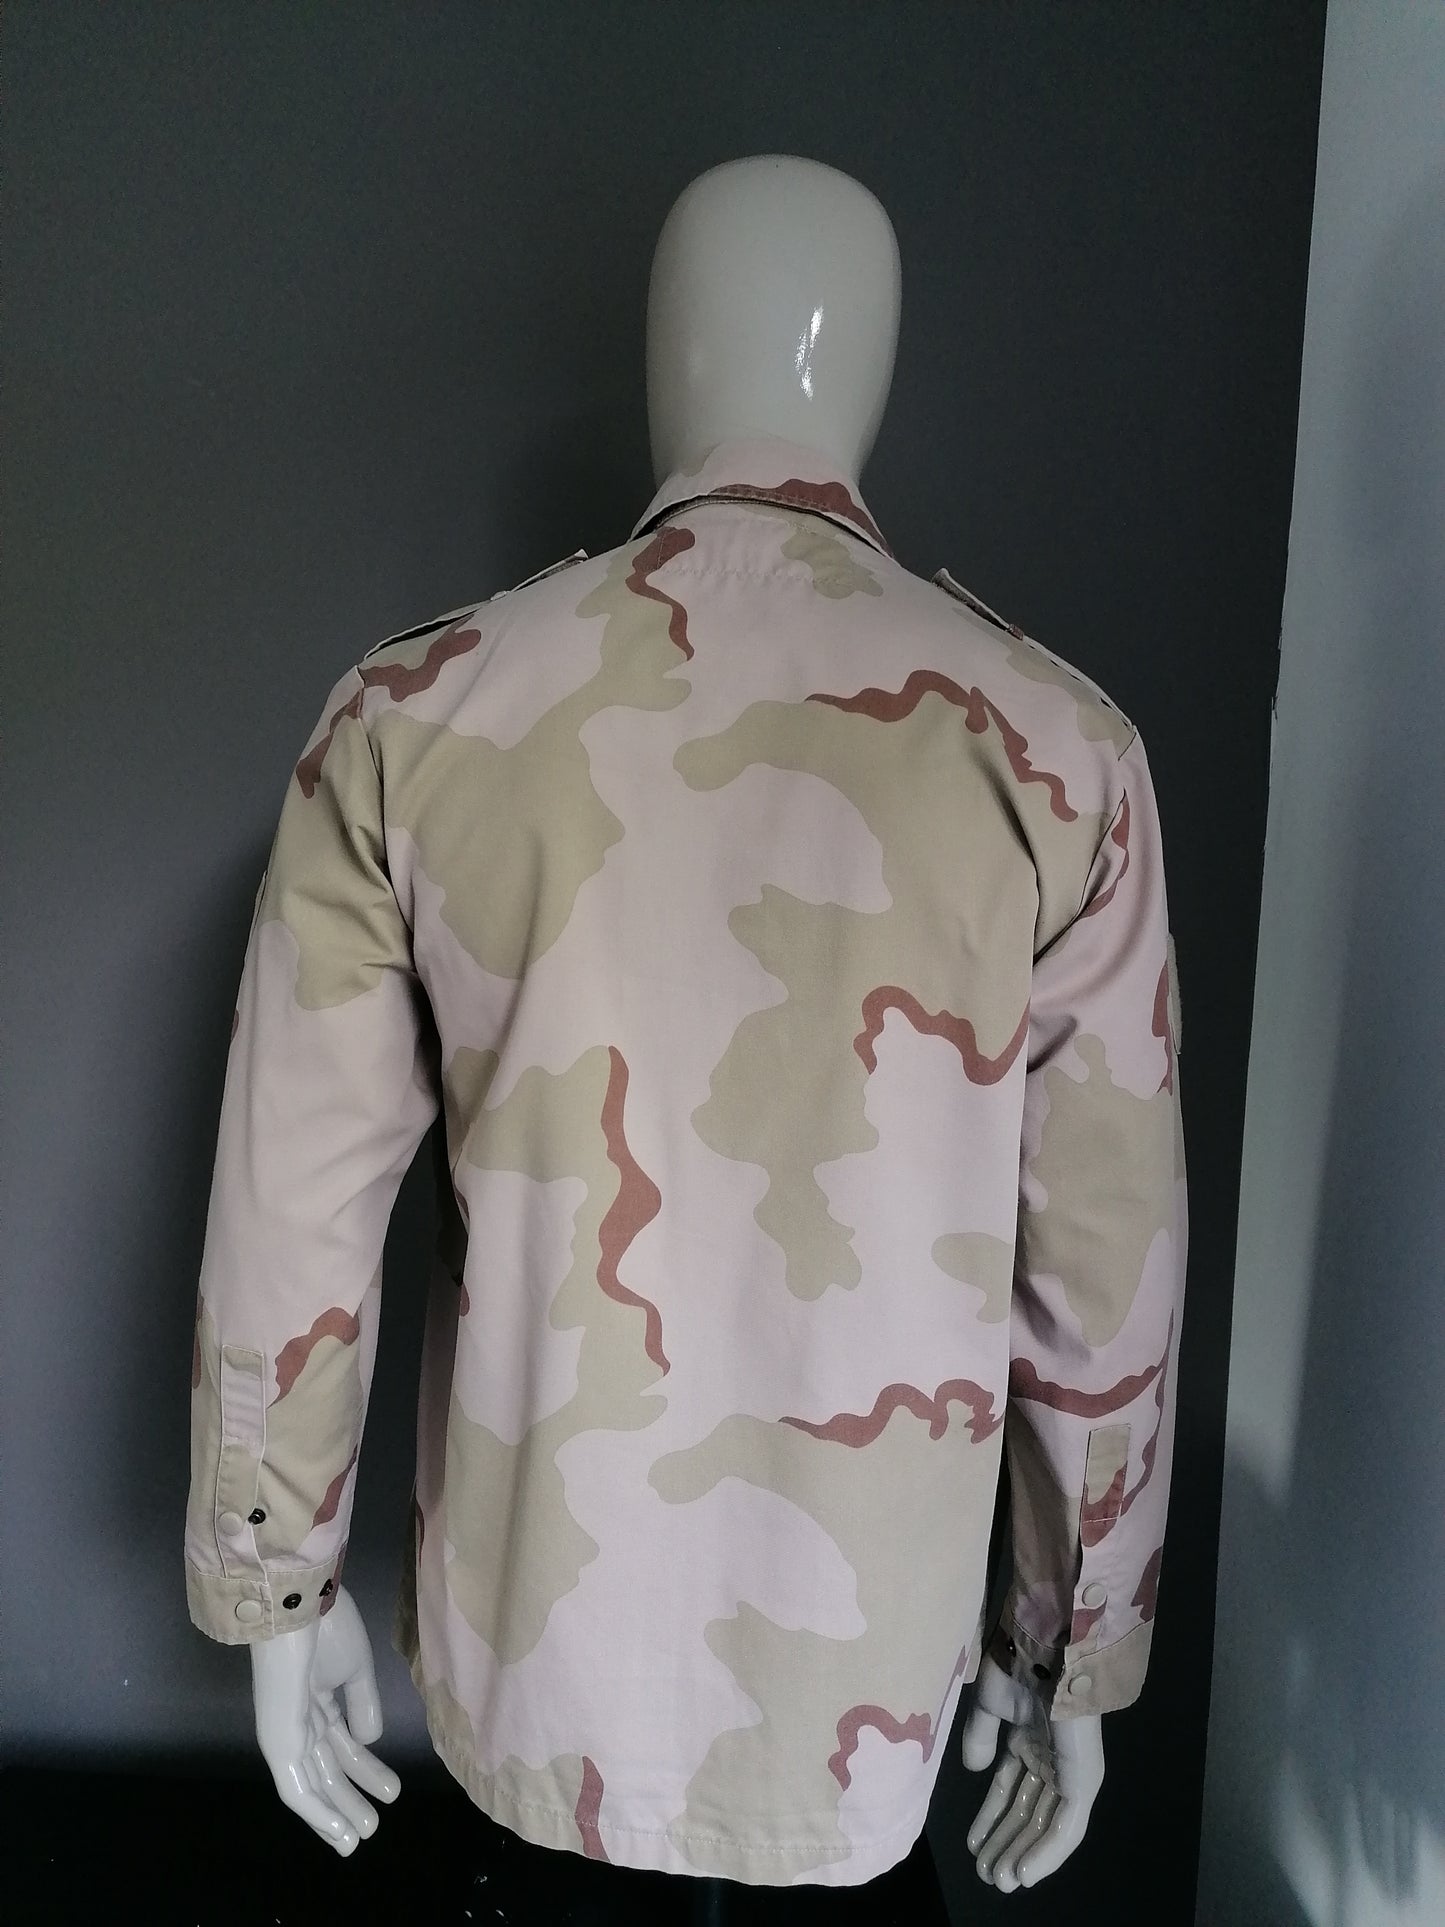 Vintage Army / Army shirt (2004). Desert Camouflage print. Size XL. Original